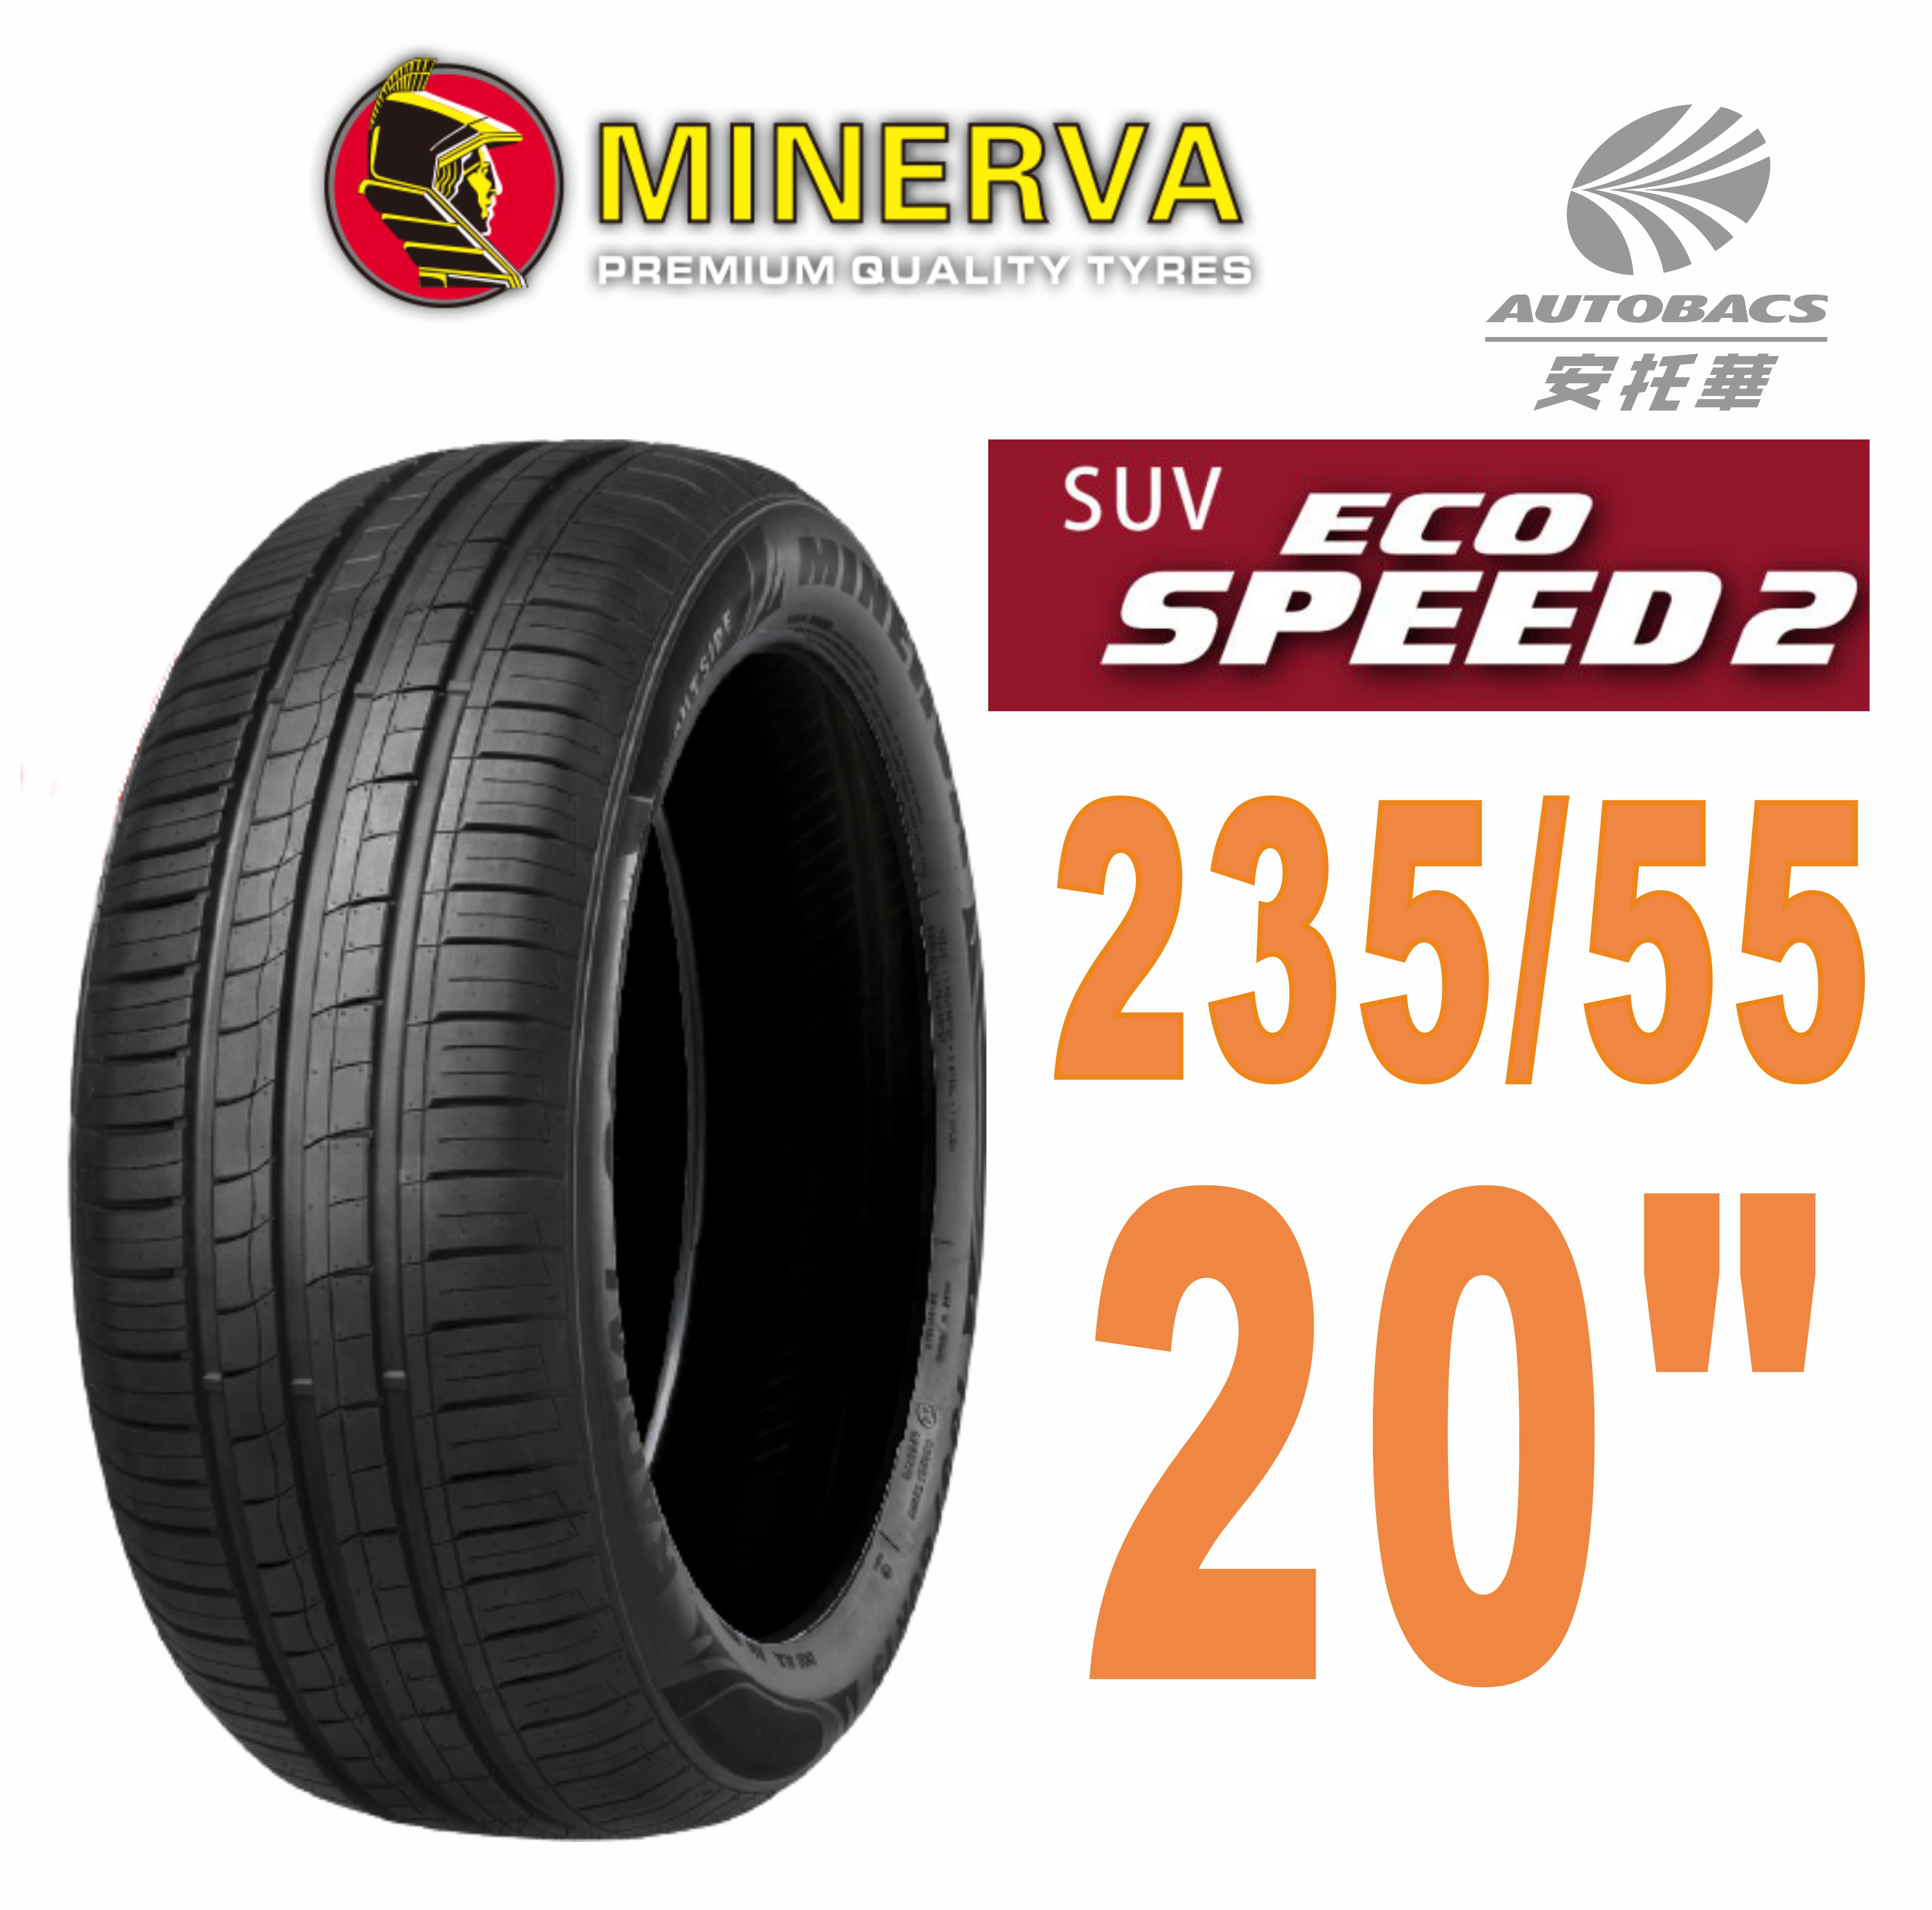 【MINERVA】ECOSPEED2 SUV 米納瓦休旅輪胎 235/55/20(安托華)